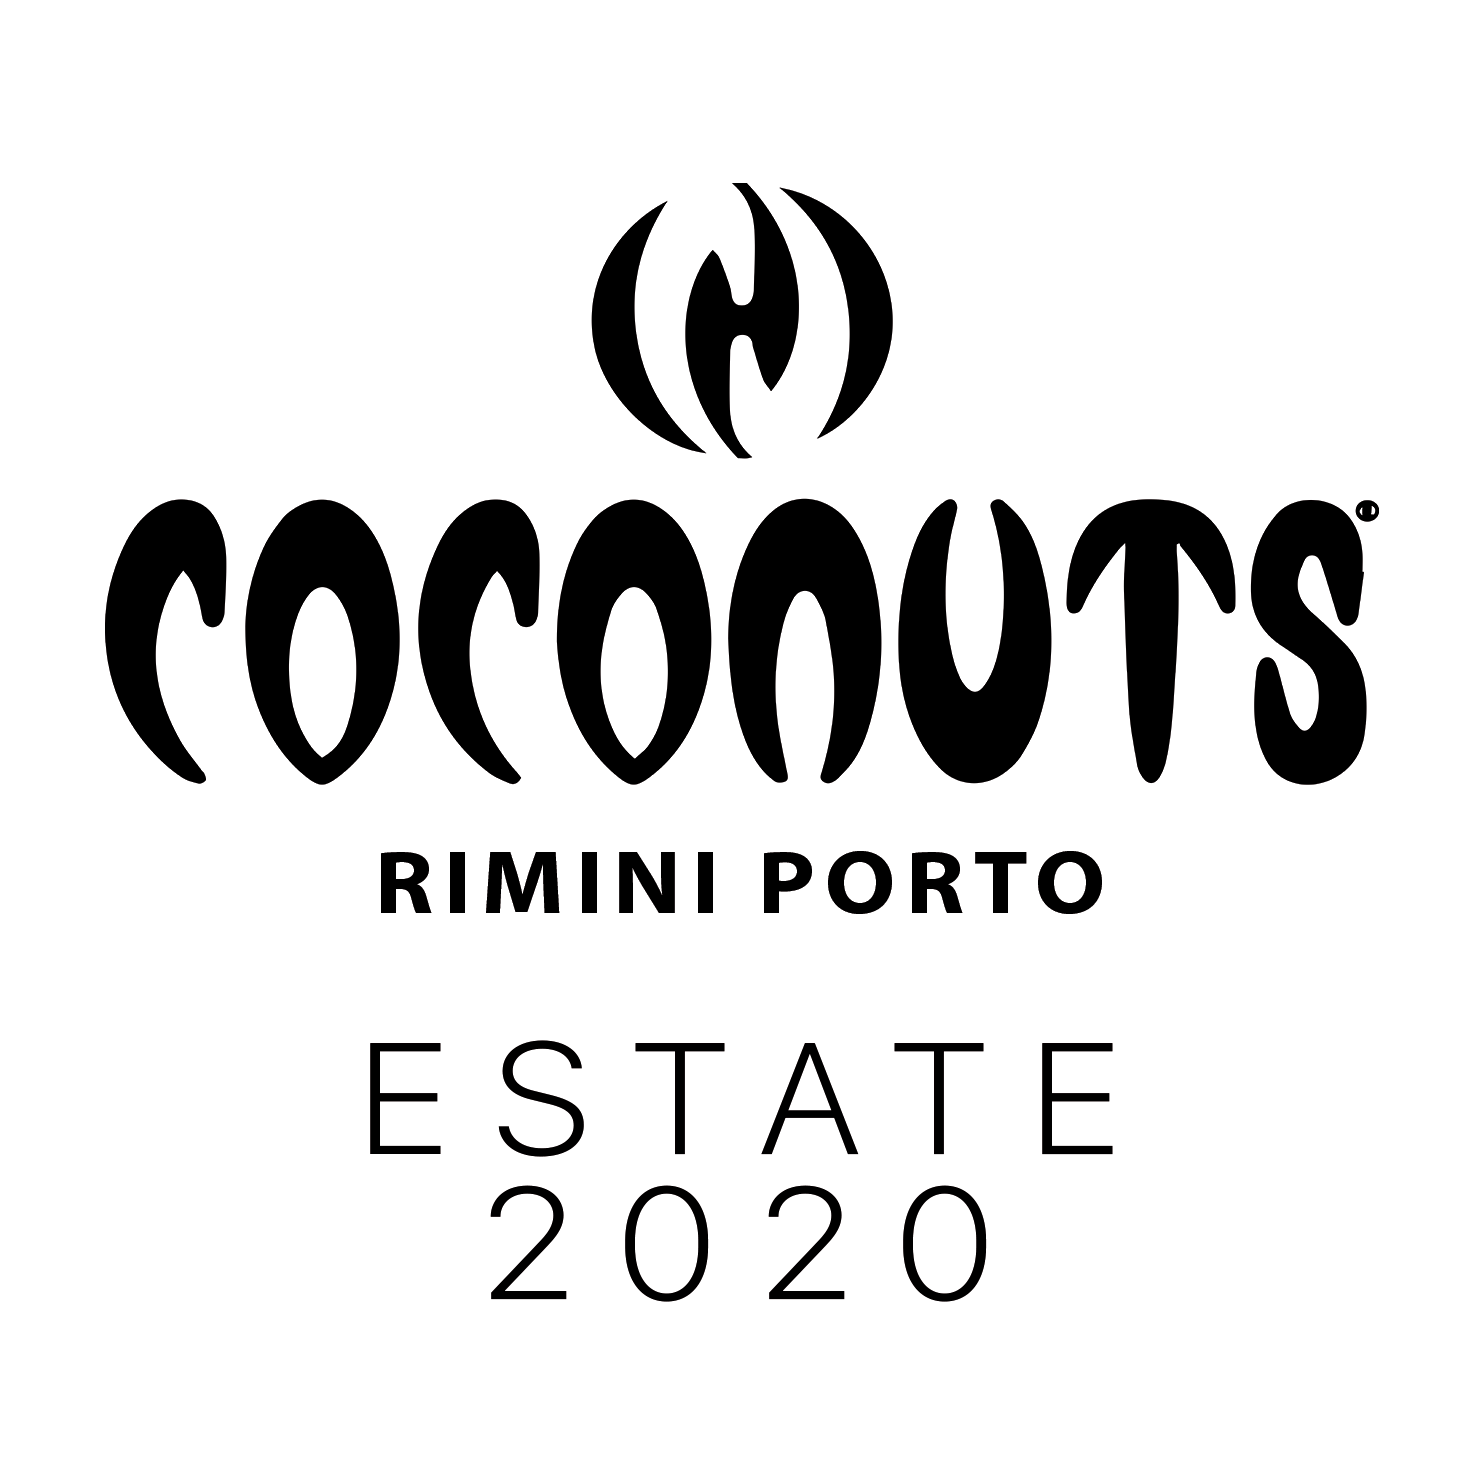 We Can’t Stop Coconuts Rimini